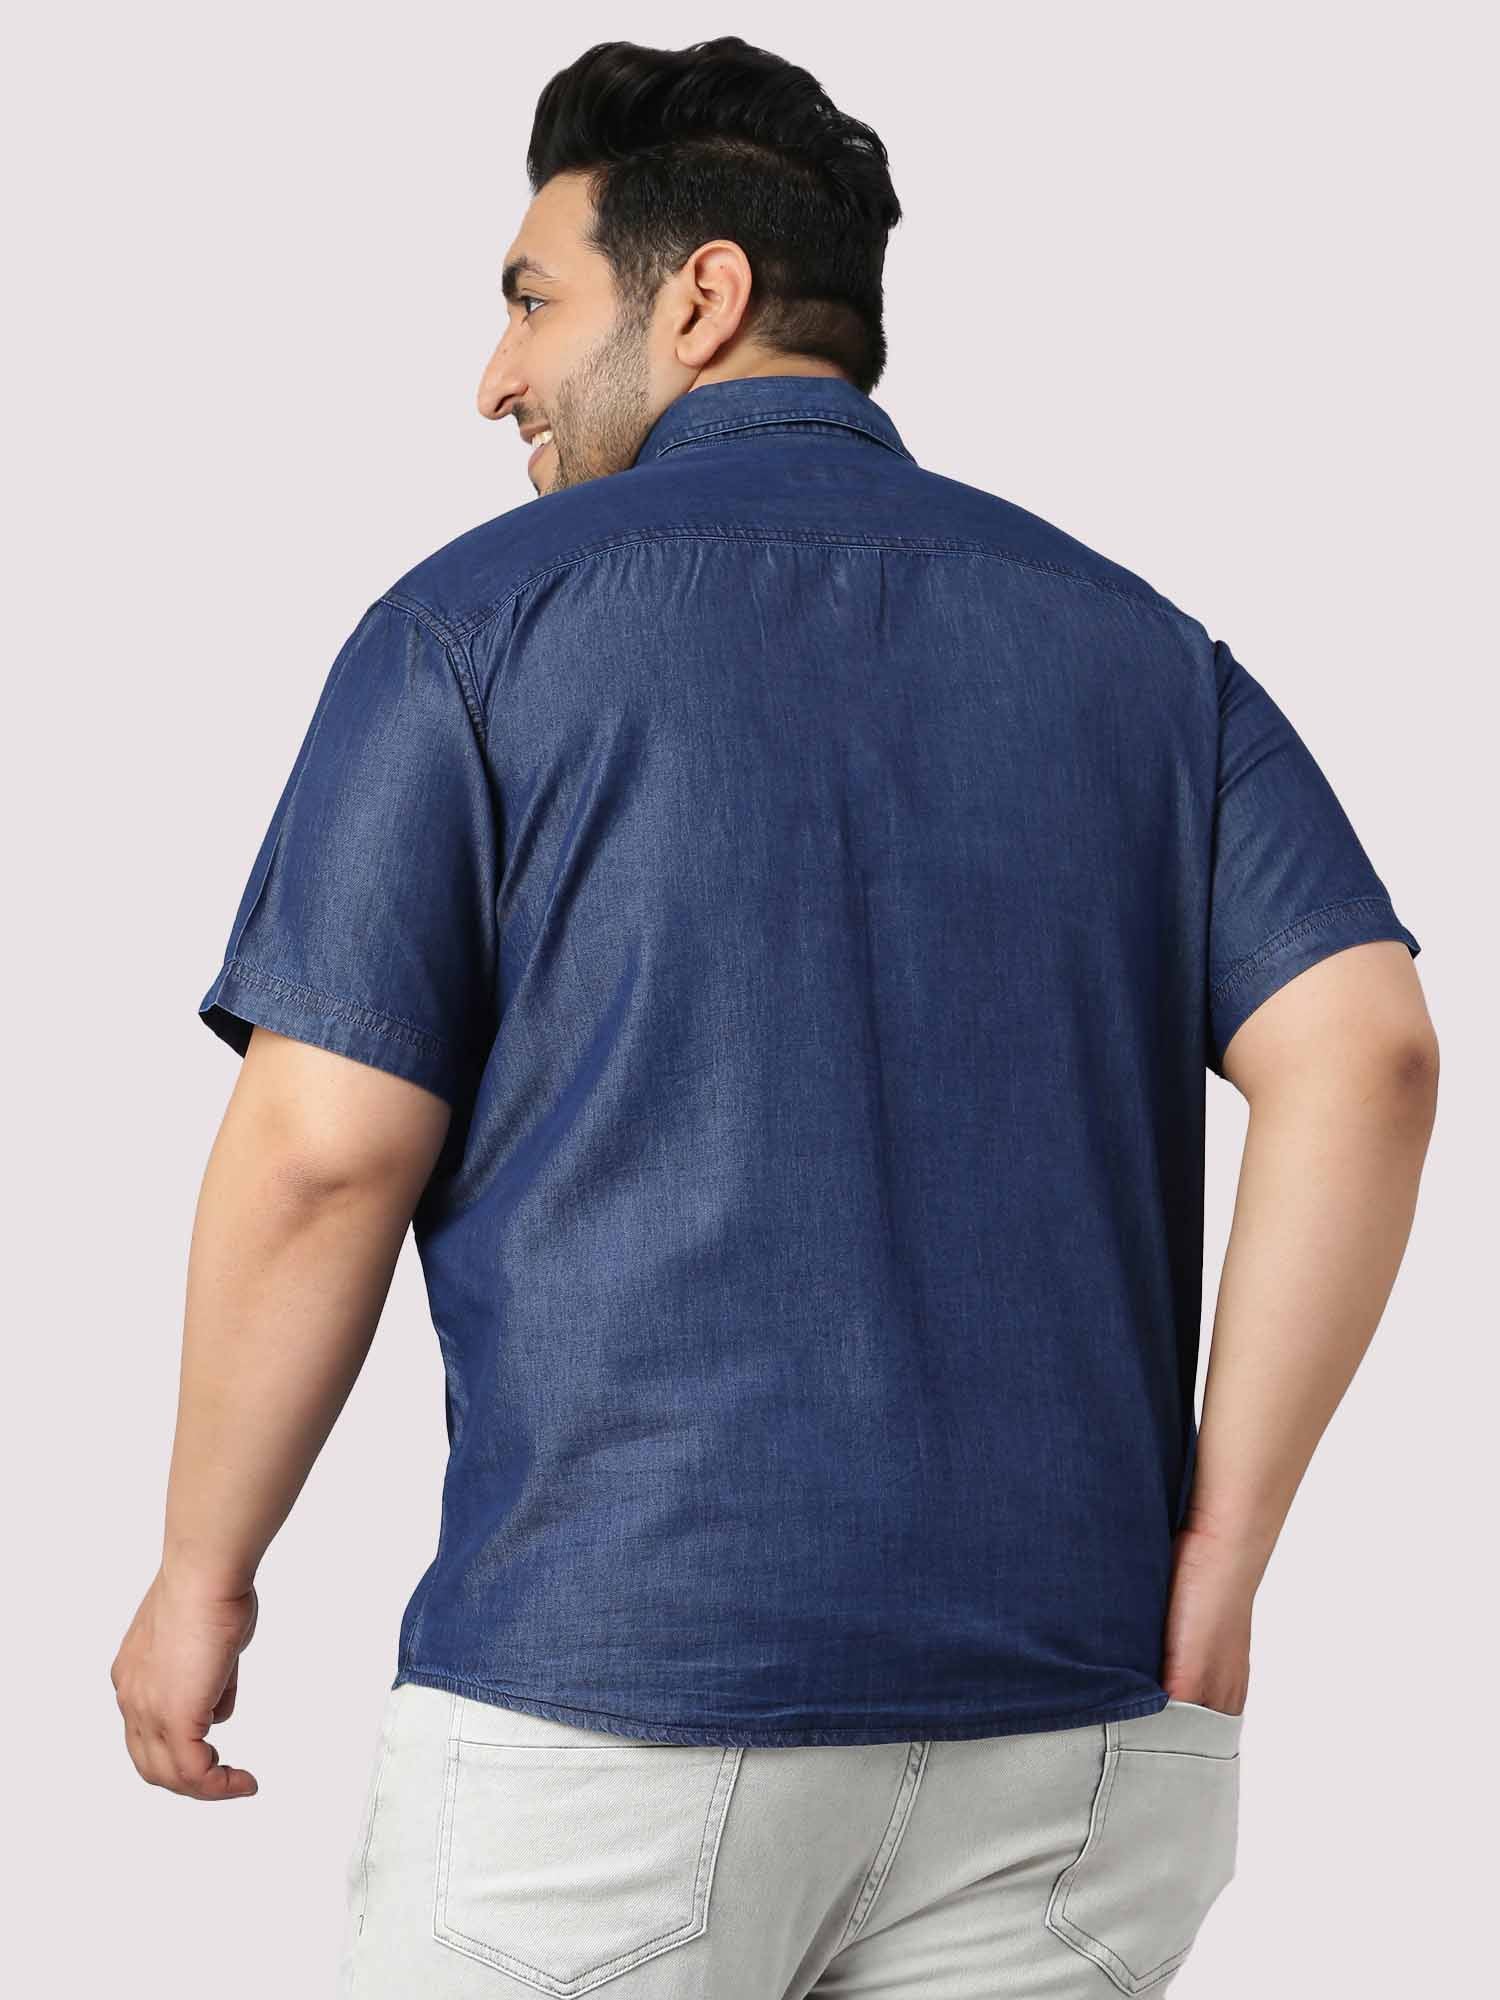 Indigo Denim Single Pocket Half Sleeve Shirt Men's Plus Size